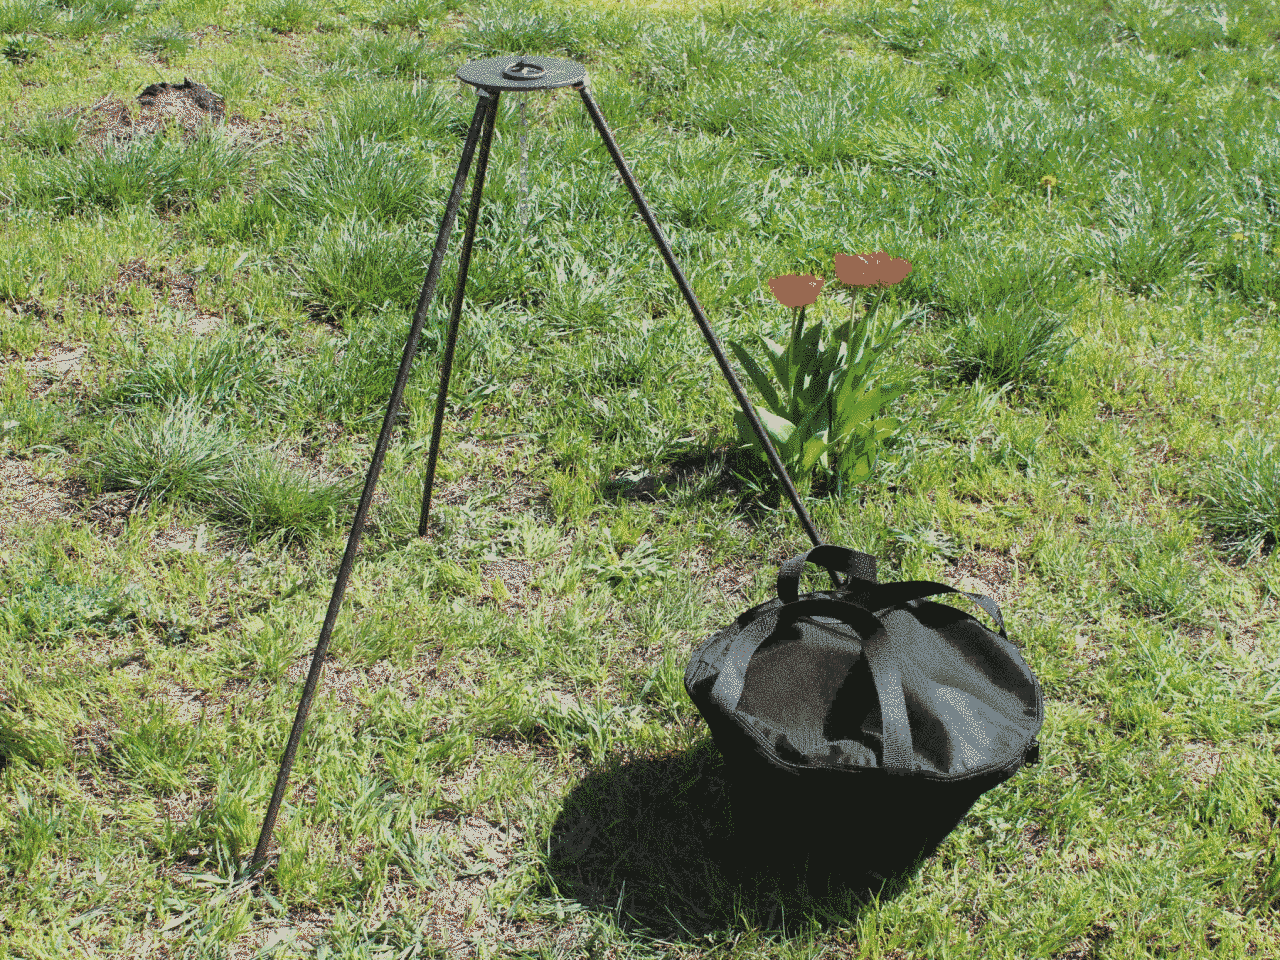 Cast iron tourist cauldron 10 L with a lid, a bag and tripod